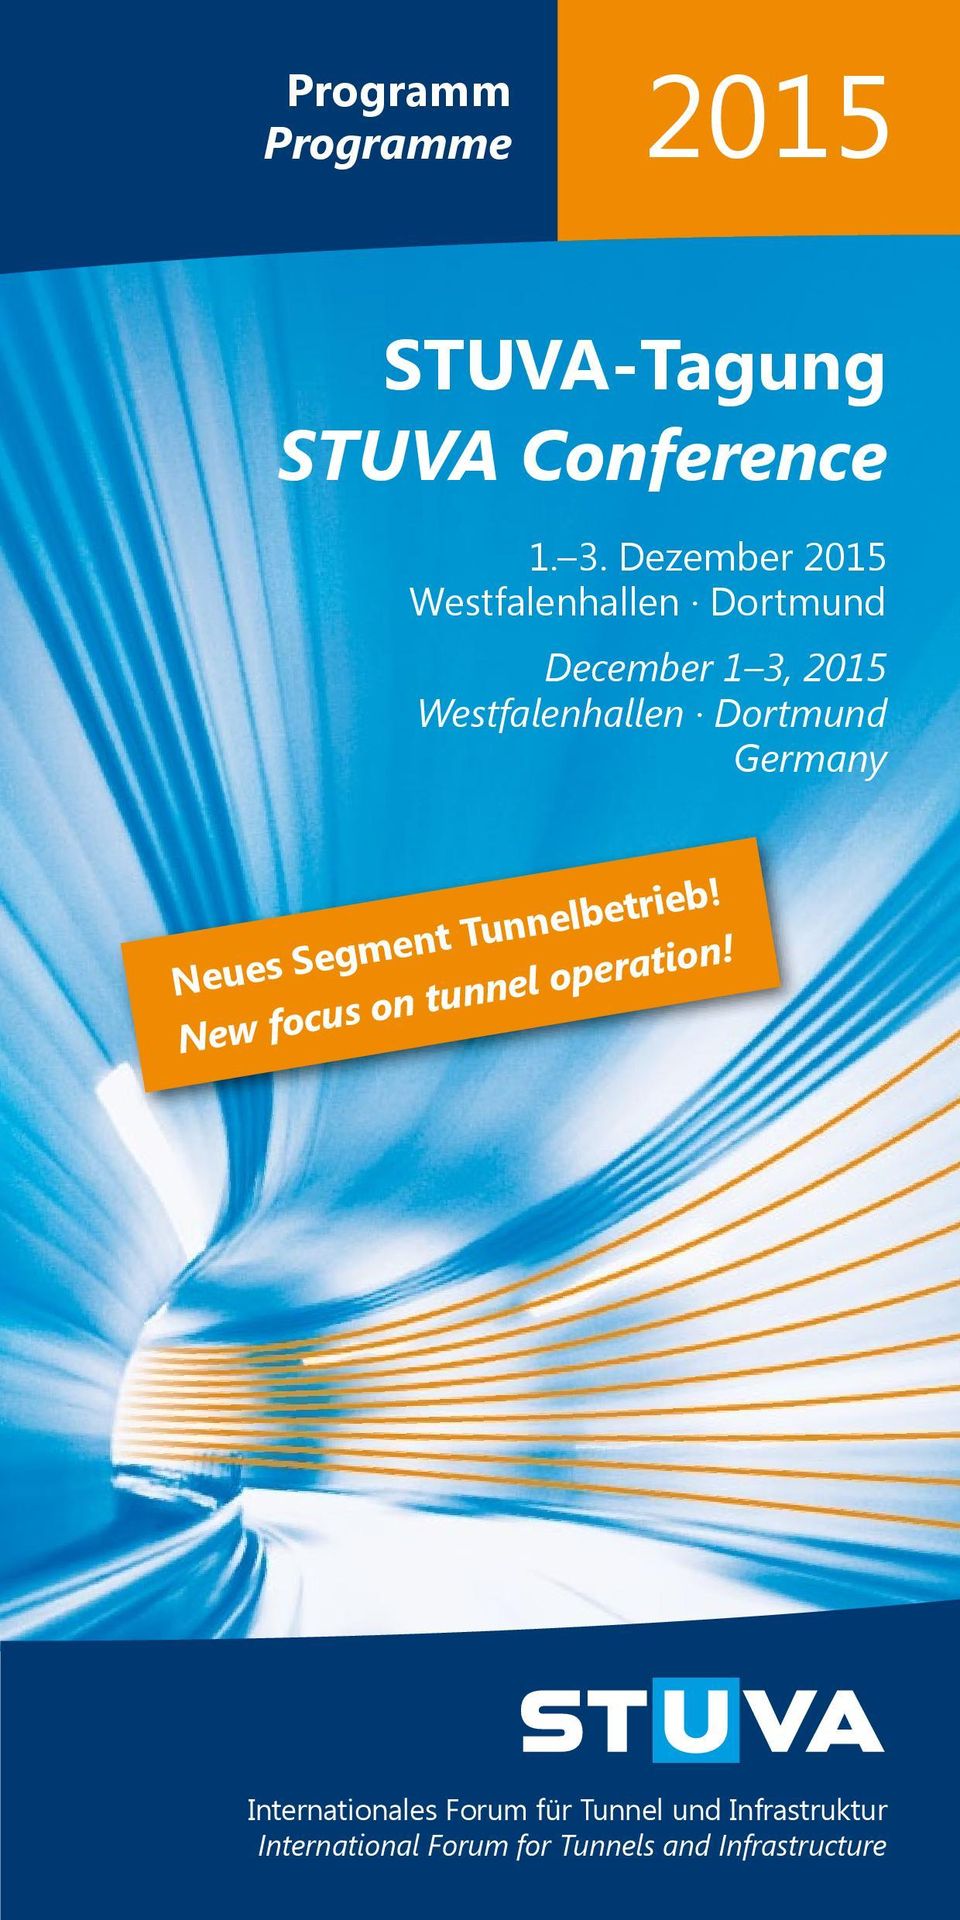 Dortmund Germany neues Segment Tunnelbetrieb! New focus on tunnel operation!